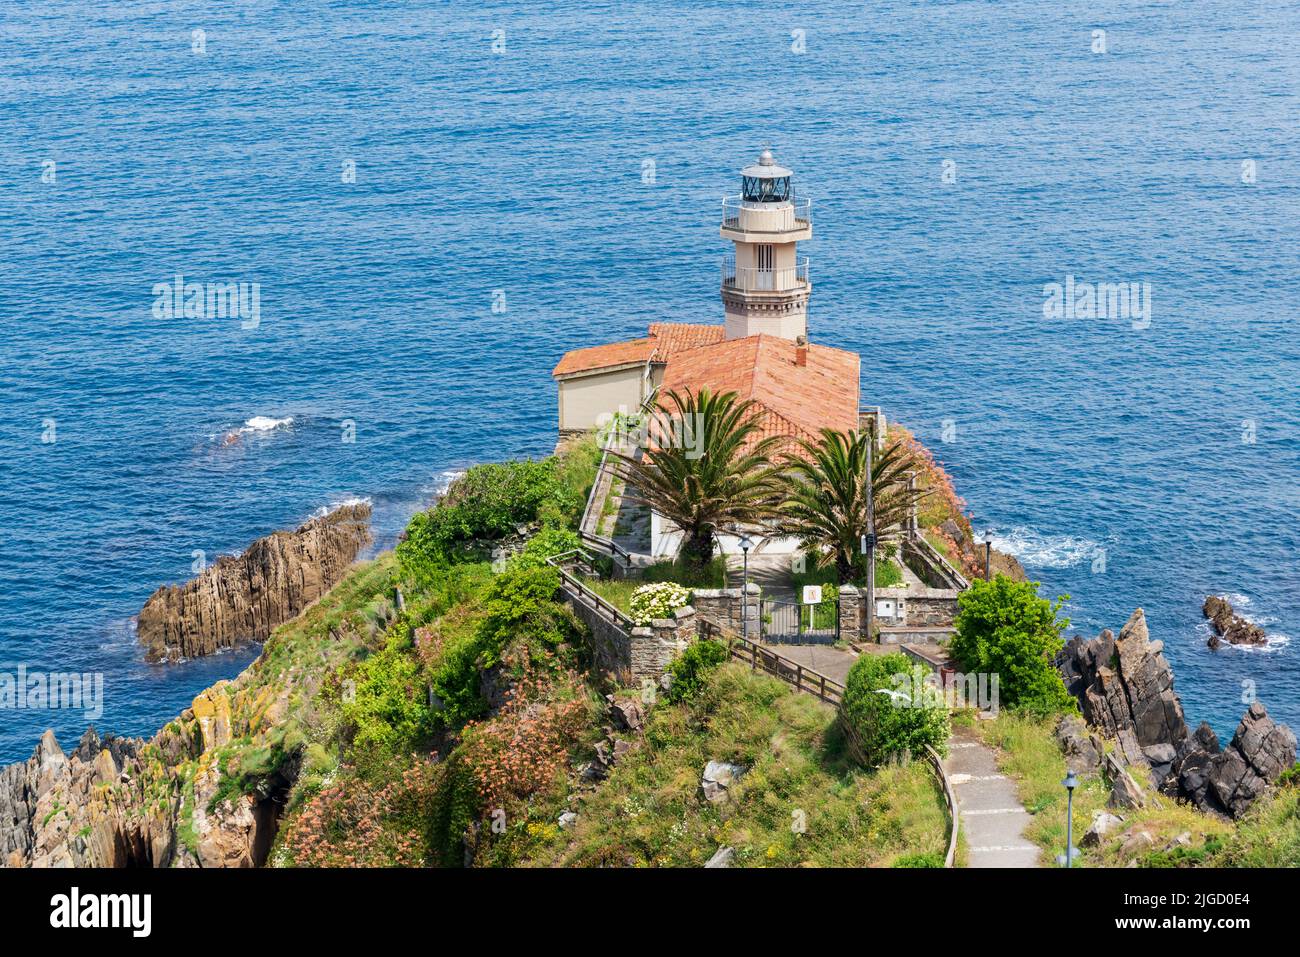 Cudillero Lighthouse, in Punta Roballera, overlooking the Cantabrian Sea. Stock Photo